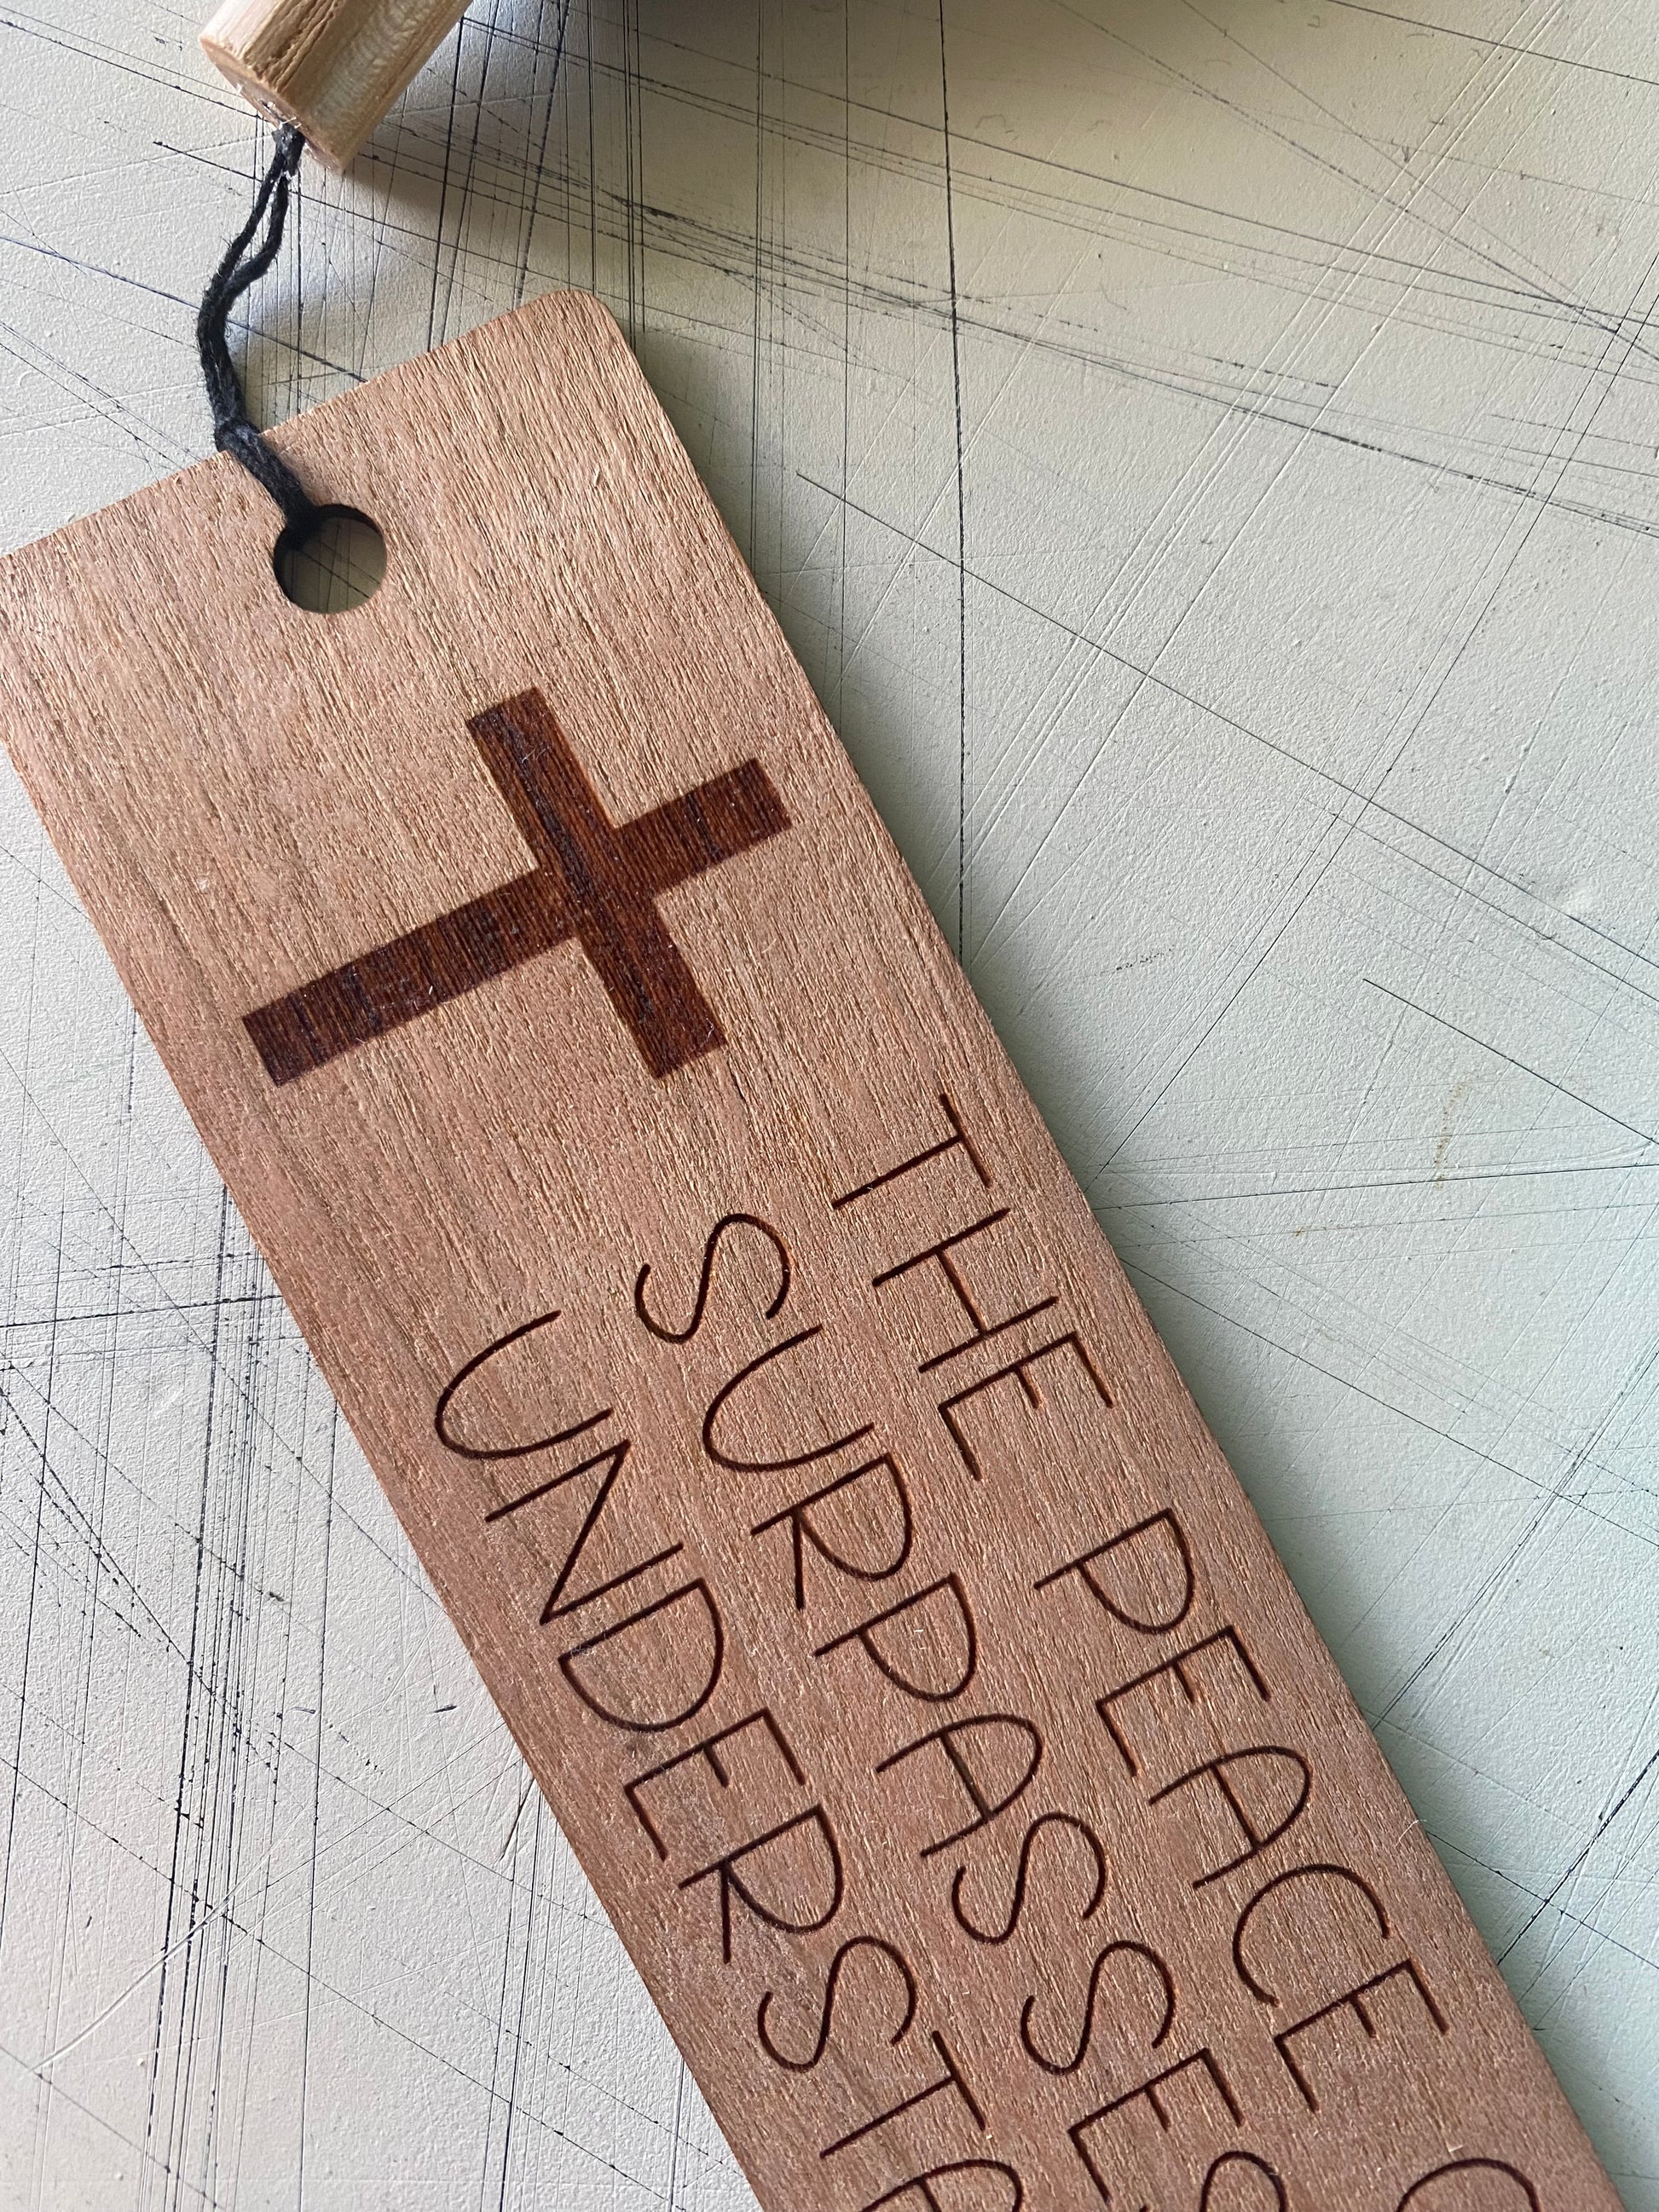 The peace of God surpasses all understanding - Novotny Designs - wood bookmark